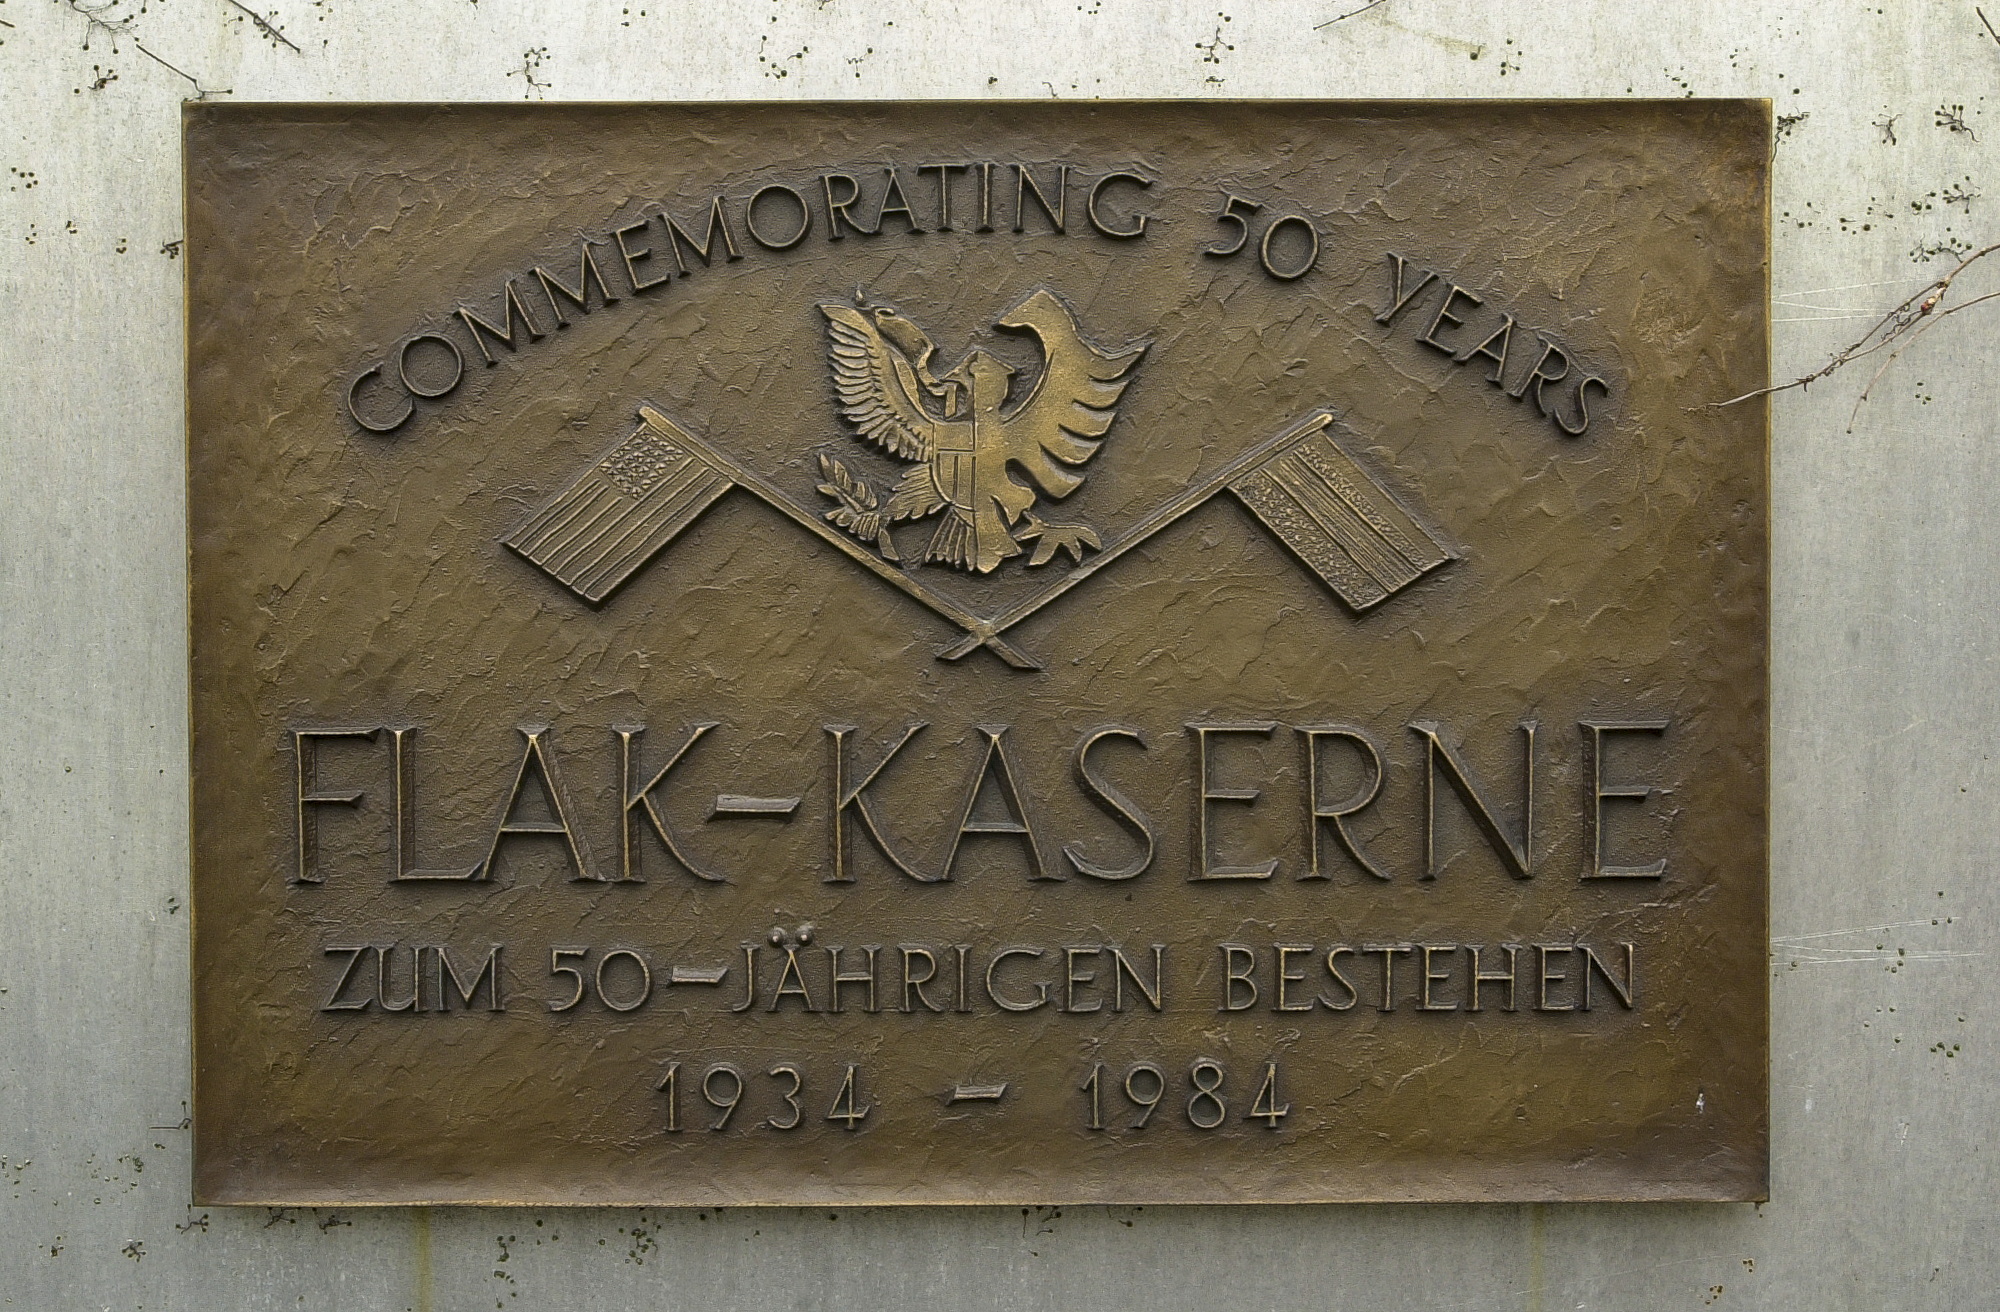 Flak Kaserne Ludwigsburg